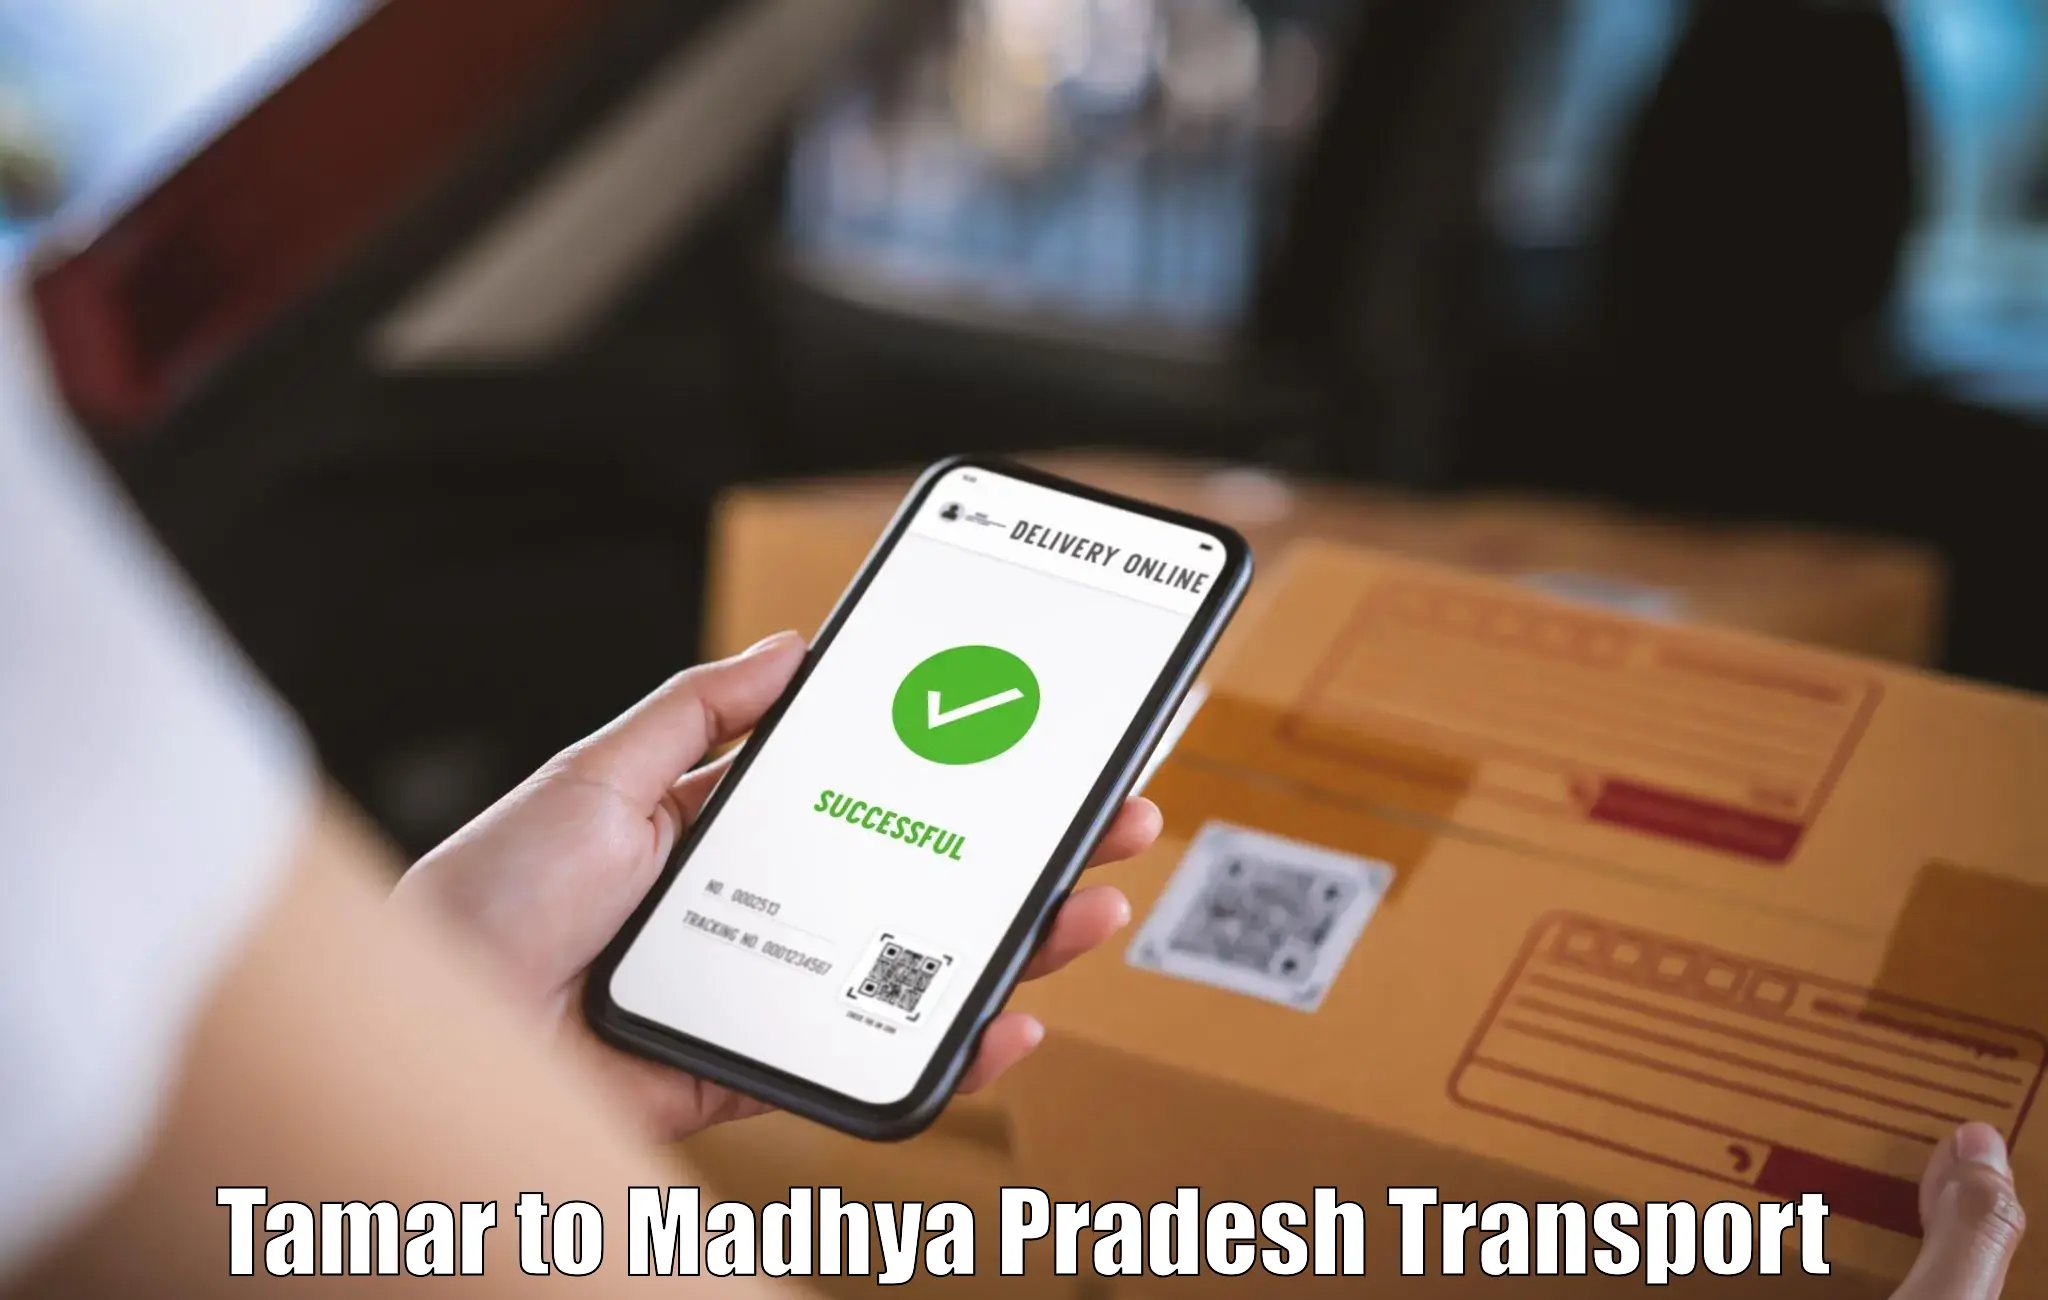 Commercial transport service Tamar to Madhya Pradesh